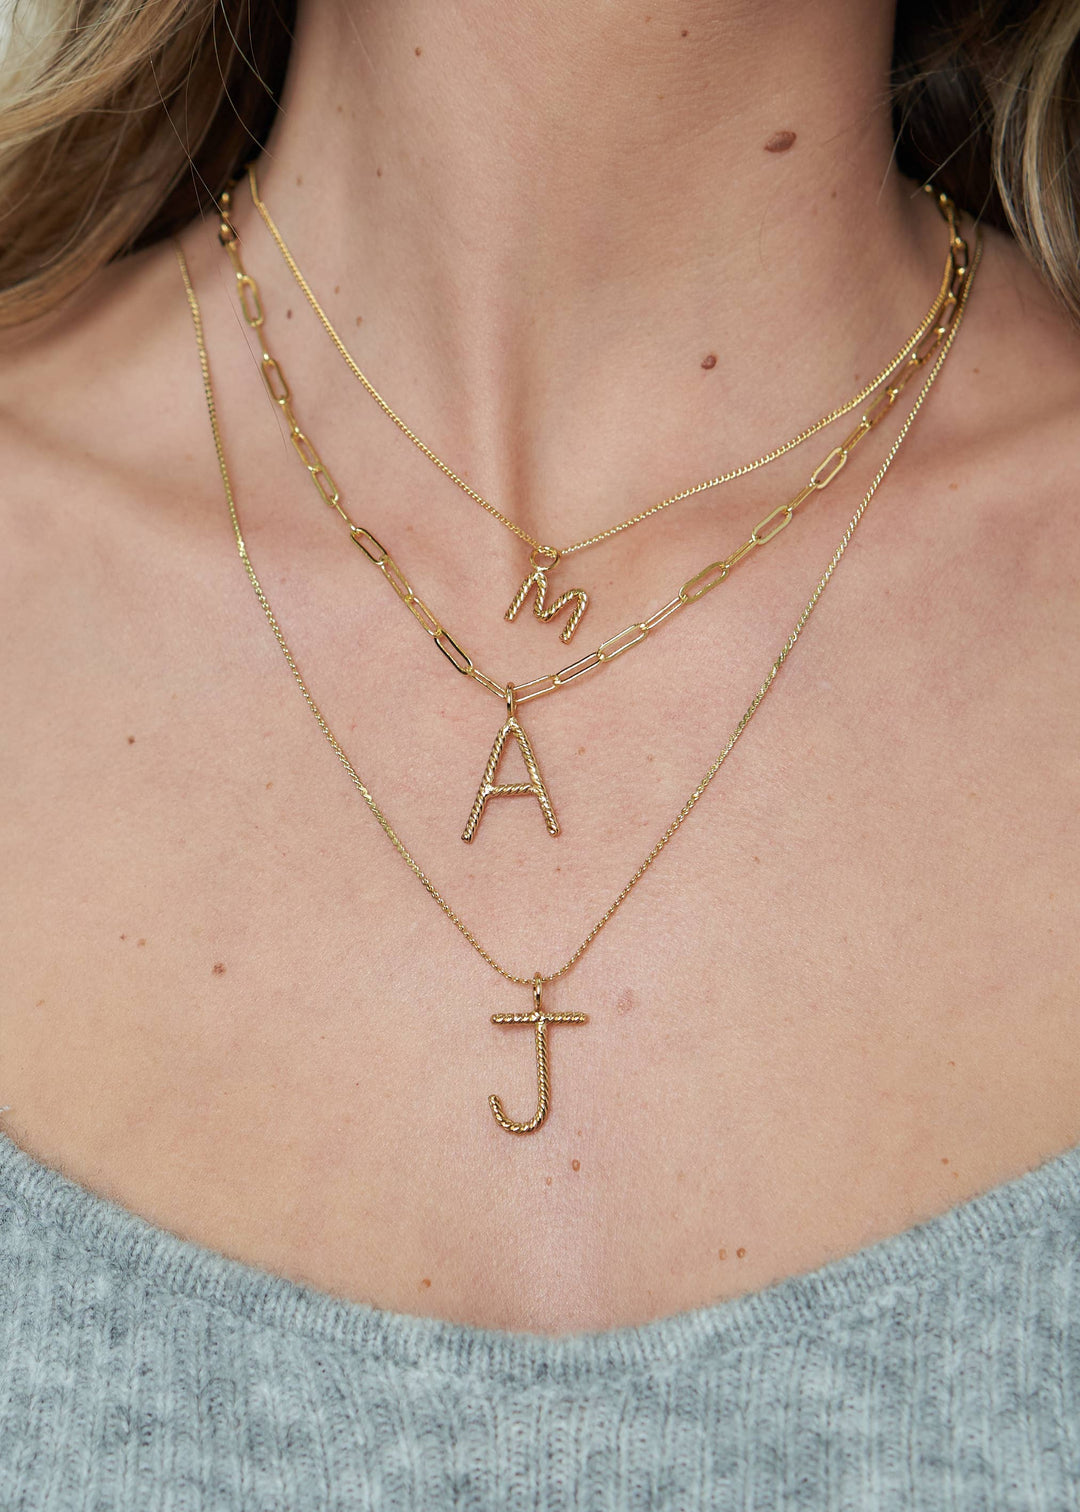 Aspen Initial Mini Necklace: Holiday Favorite!: J / 14"+3"